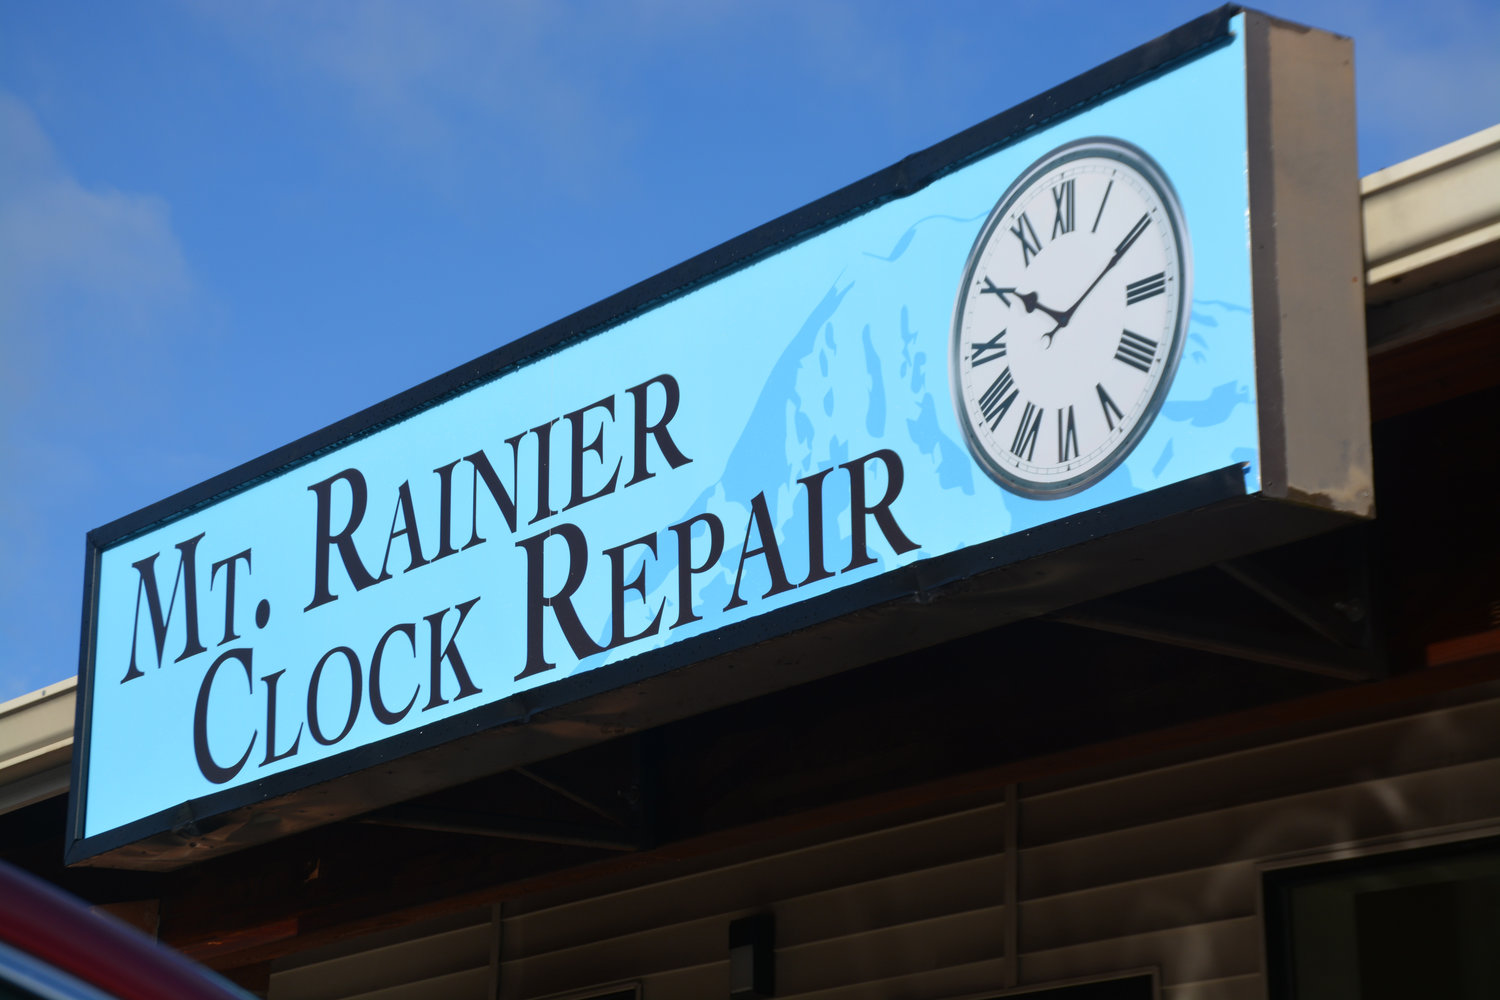 Mount Rainier Clock Repair is located at 10501 Creek St.